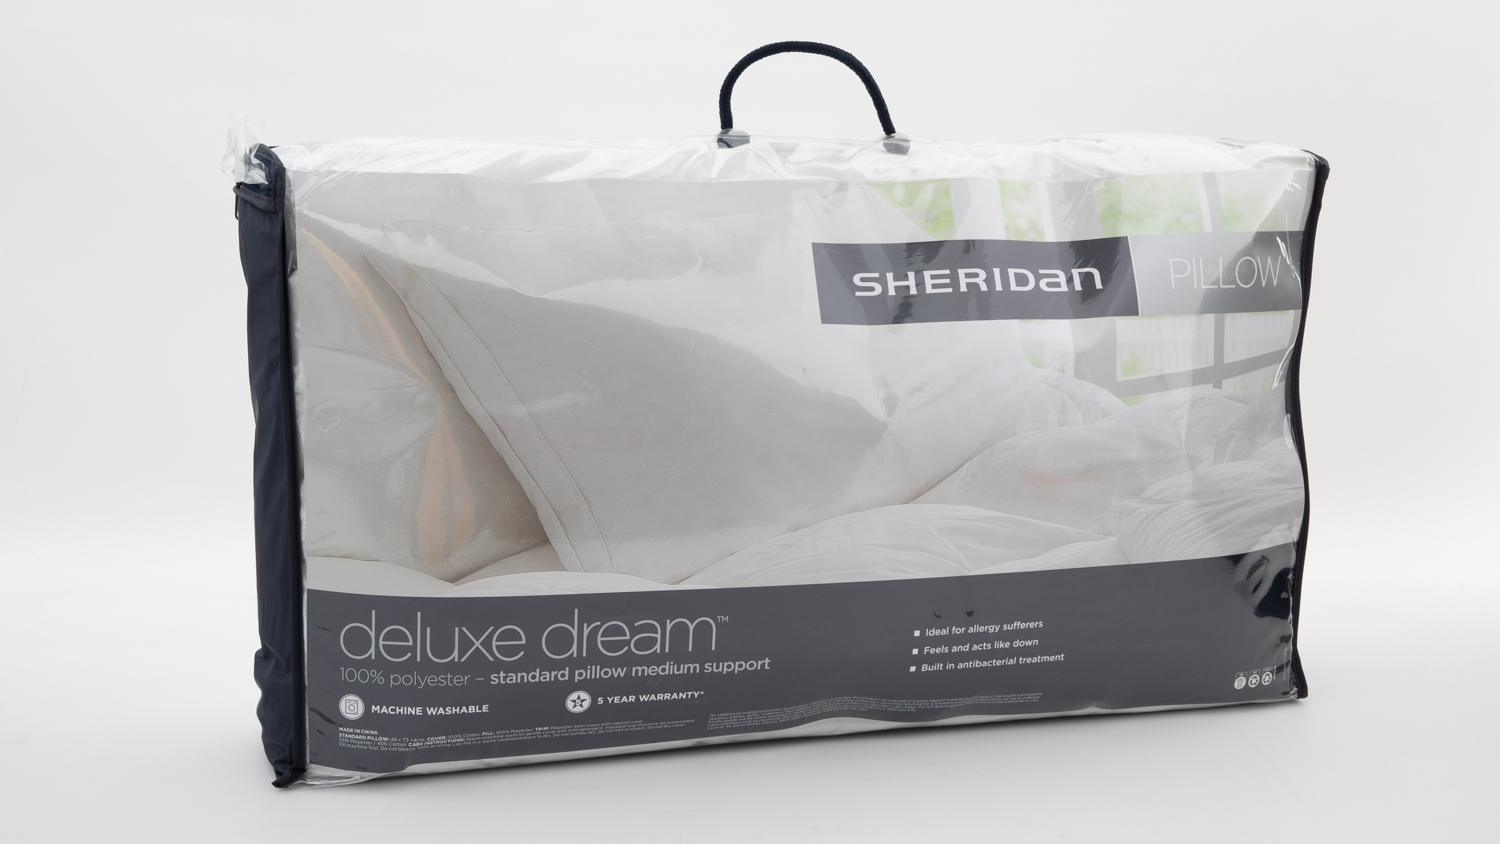 Sheridan Deluxe Dream Standard Pillow - Medium Support carousel image